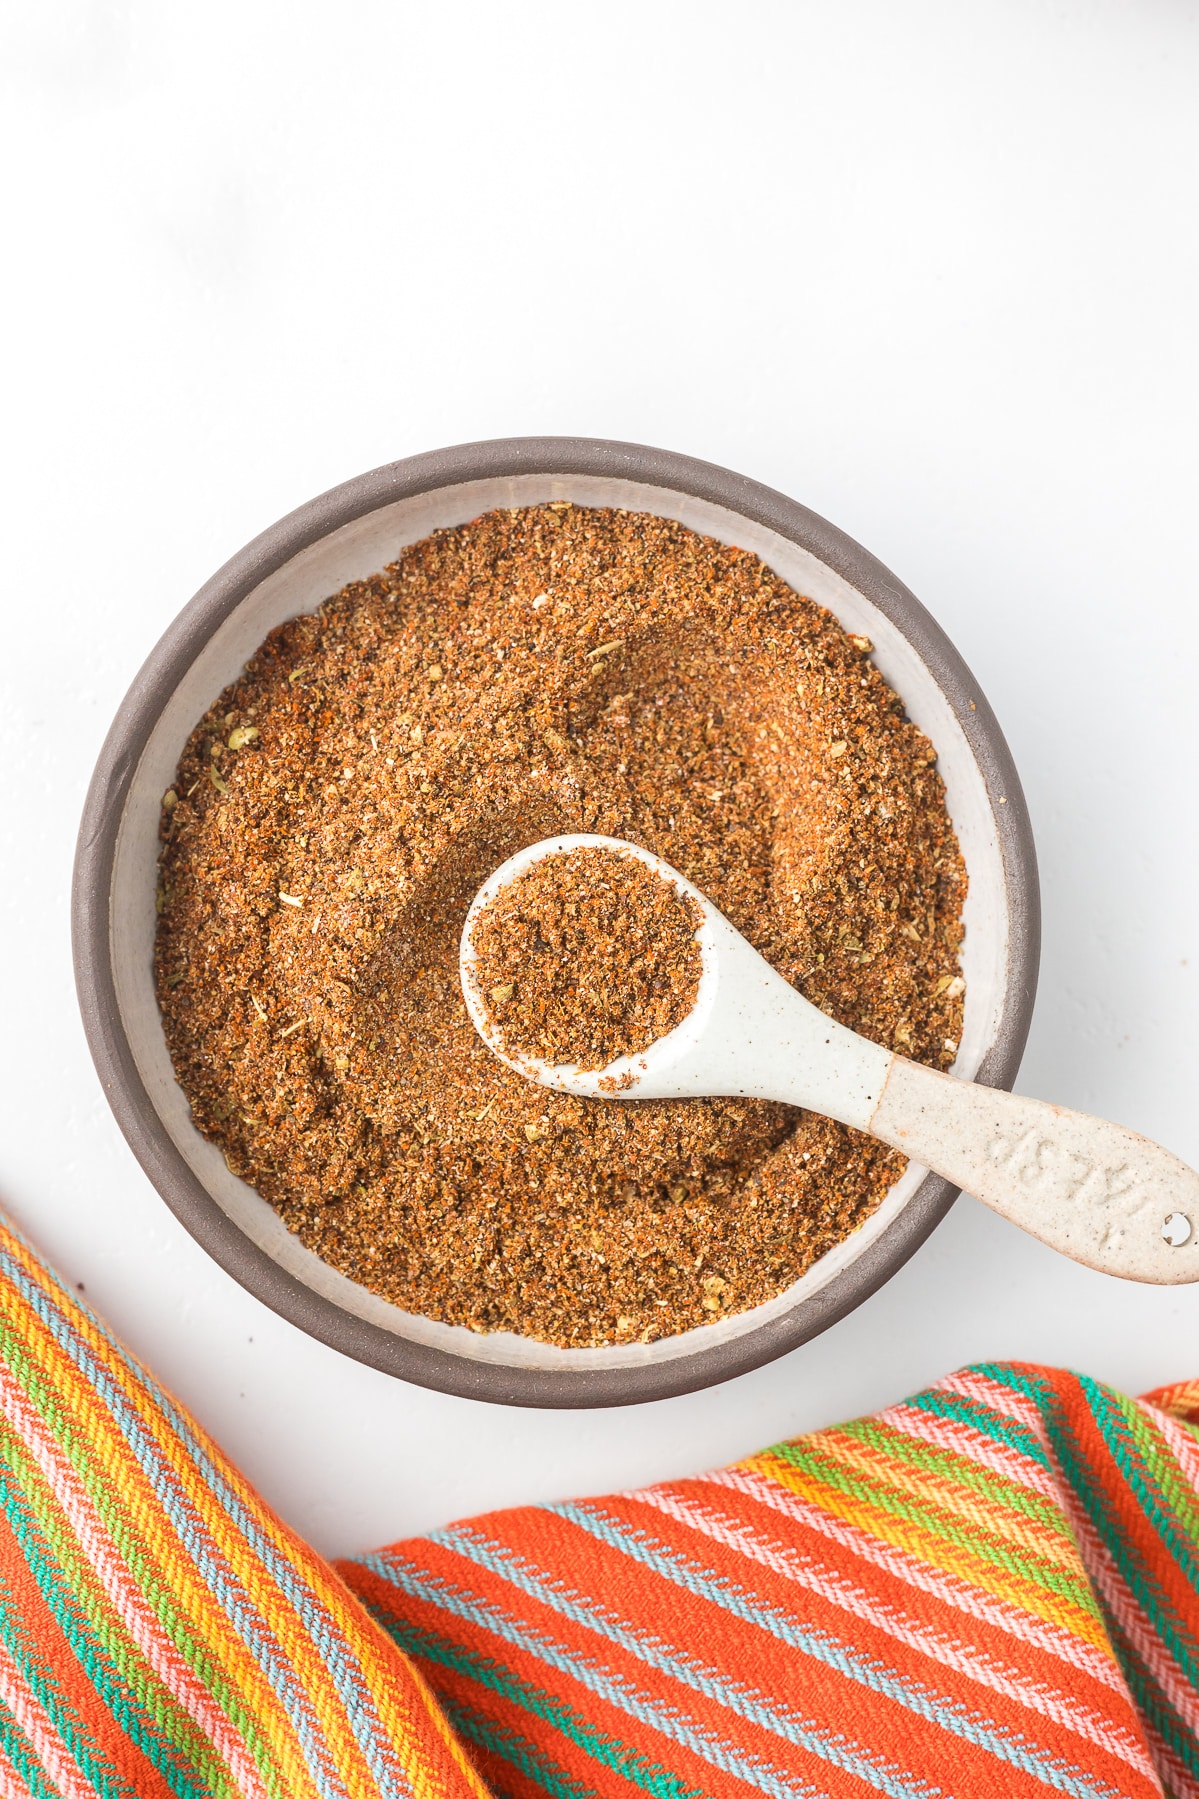 Simple Cajun Spice Mix Recipe - Add a Pinch